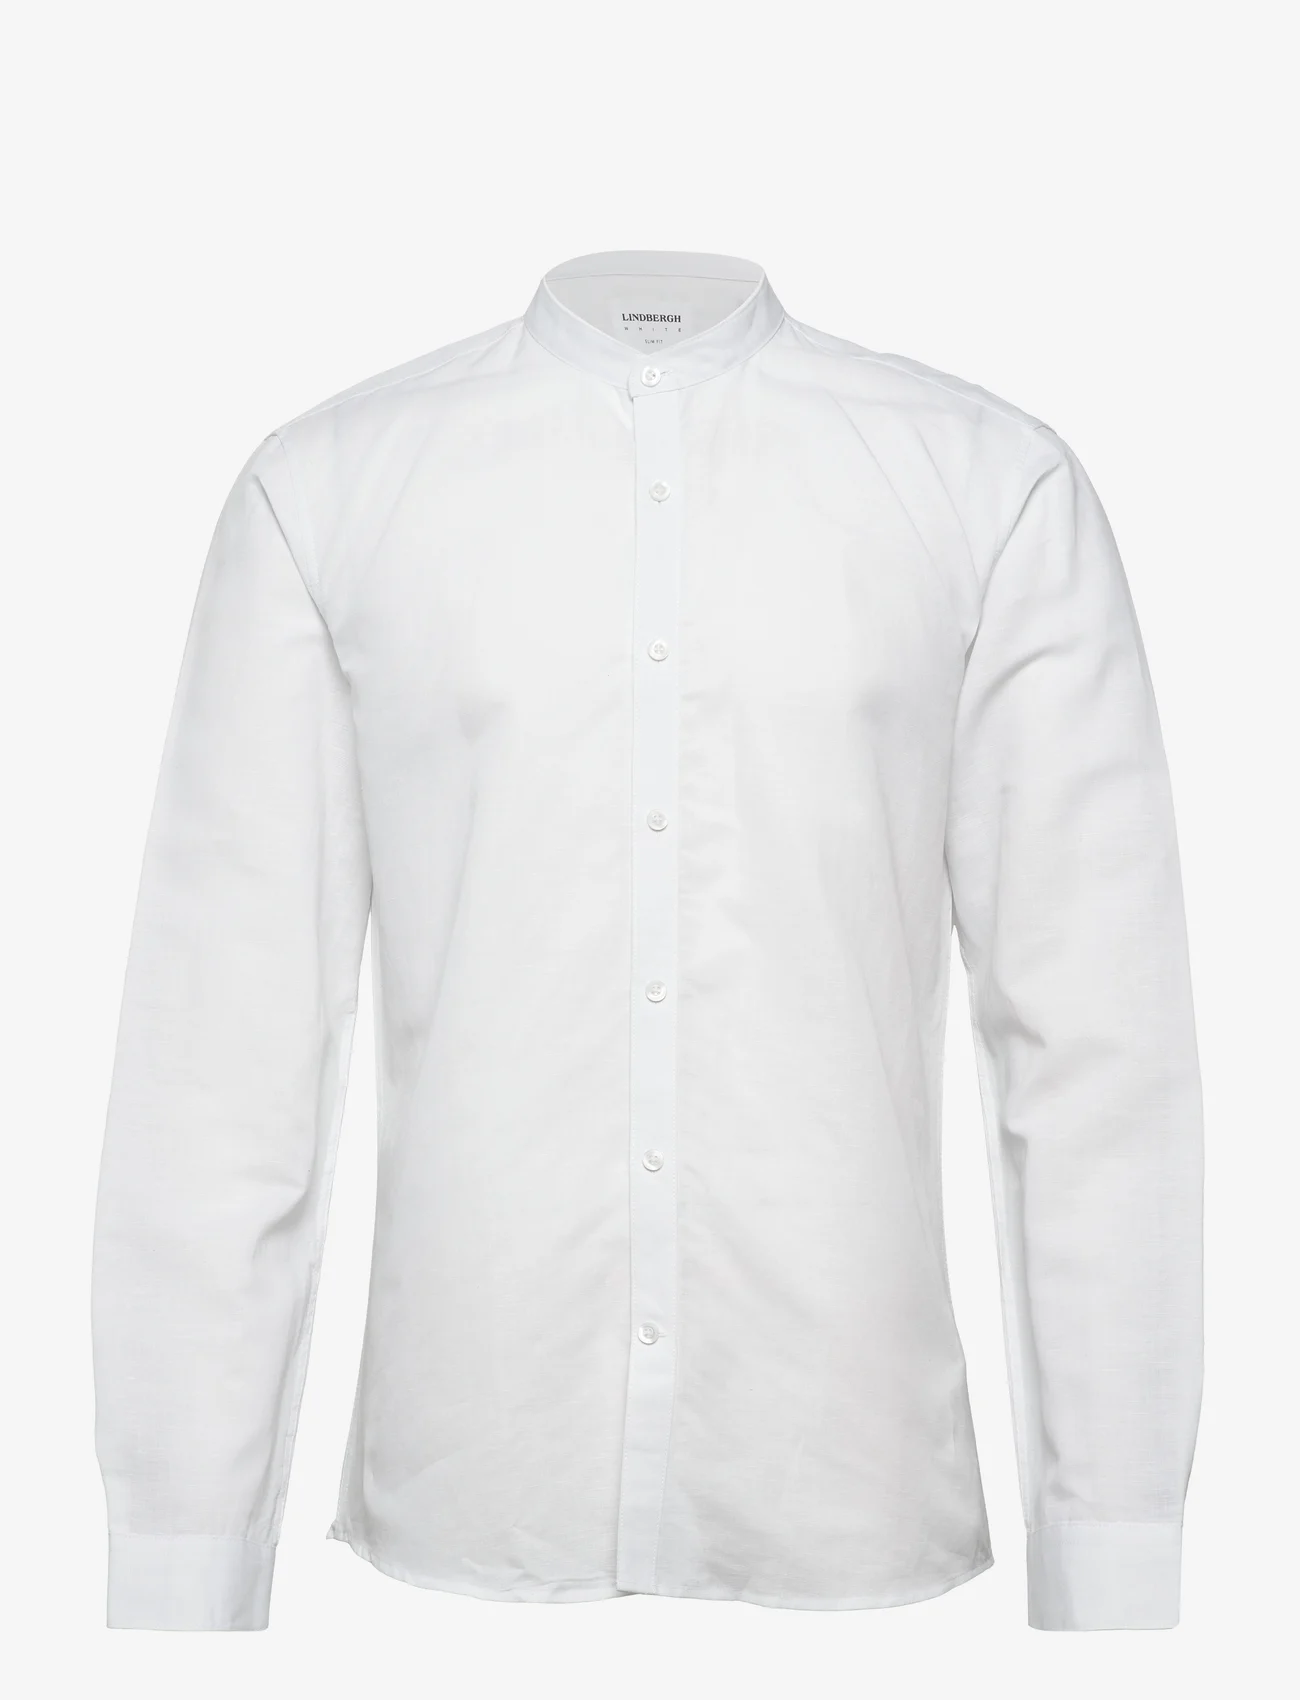 Lindbergh - Mandarin linen blend shirt L/S - leinenhemden - white - 0